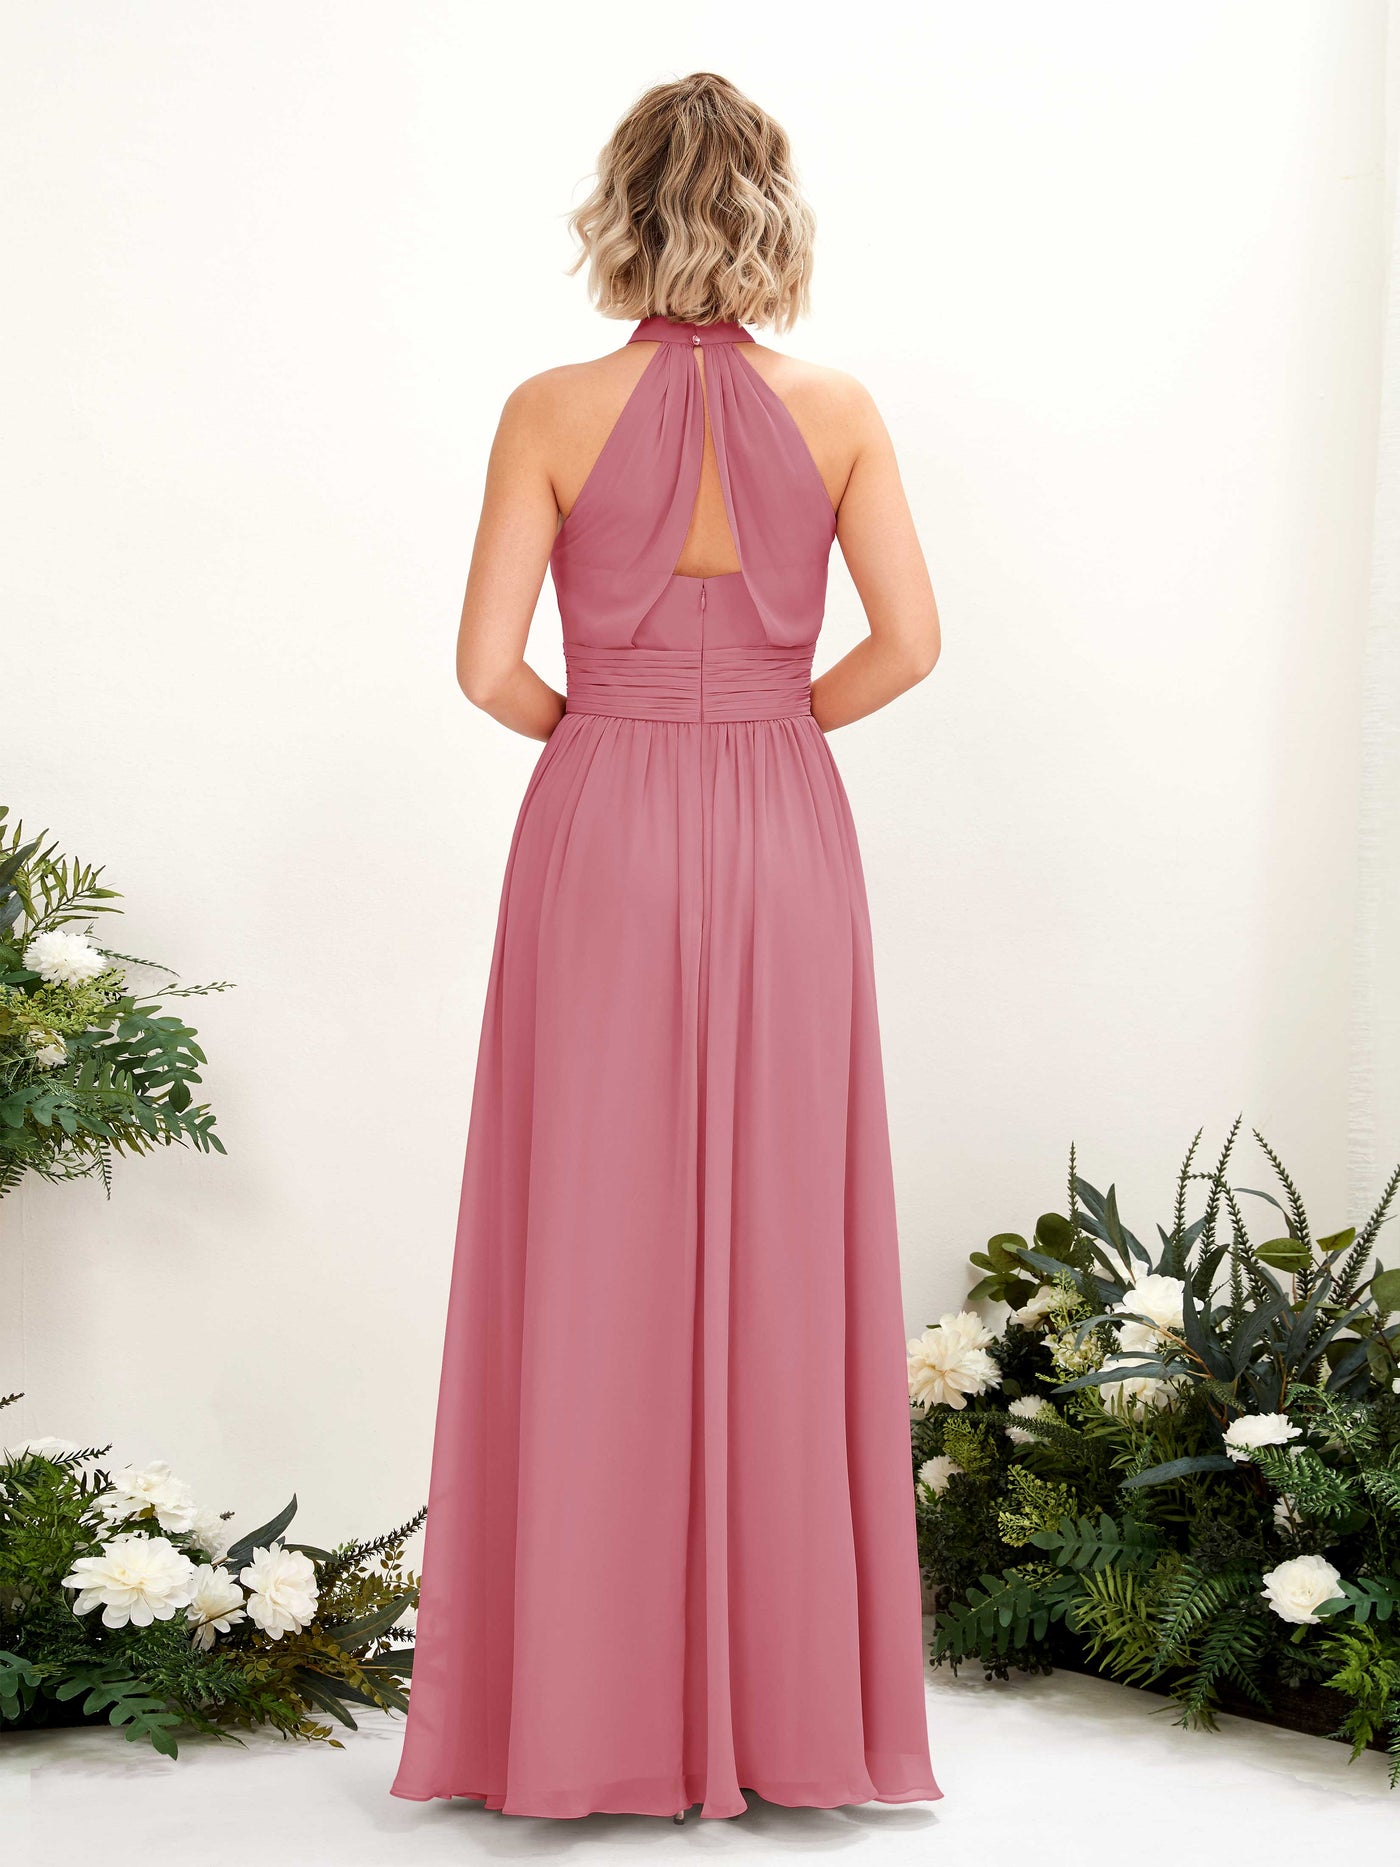 Desert Rose Bridesmaid Dresses Bridesmaid Dress A-line Chiffon Halter Full Length Sleeveless Wedding Party Dress (81225311)#color_desert-rose